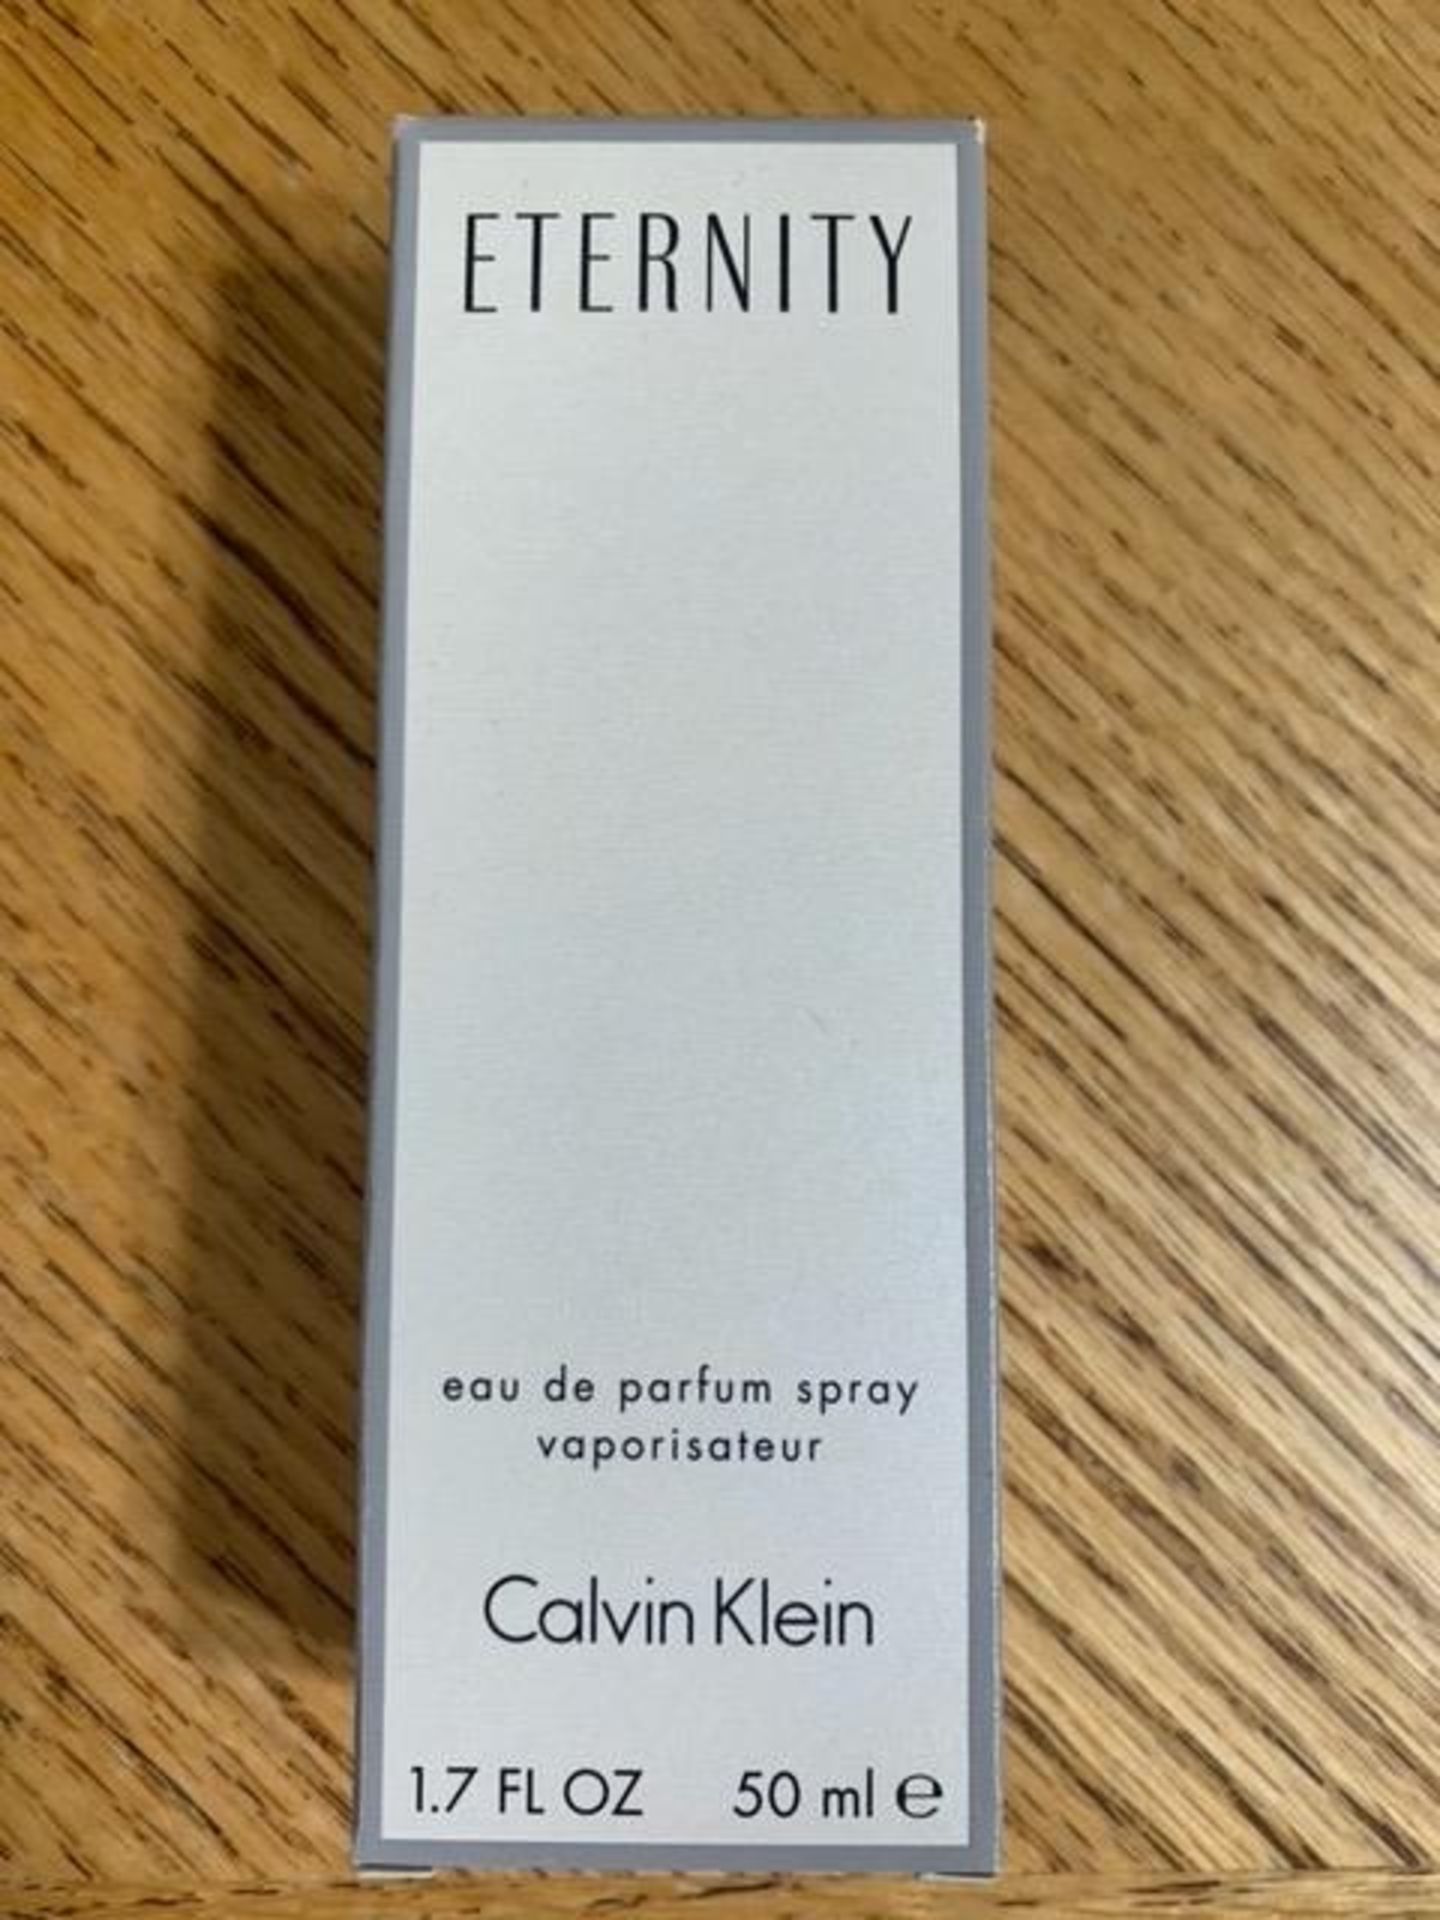 Calvin Klein Eternity eau de parfum spray - 50ml - Retail Value: $75 - Donated By: